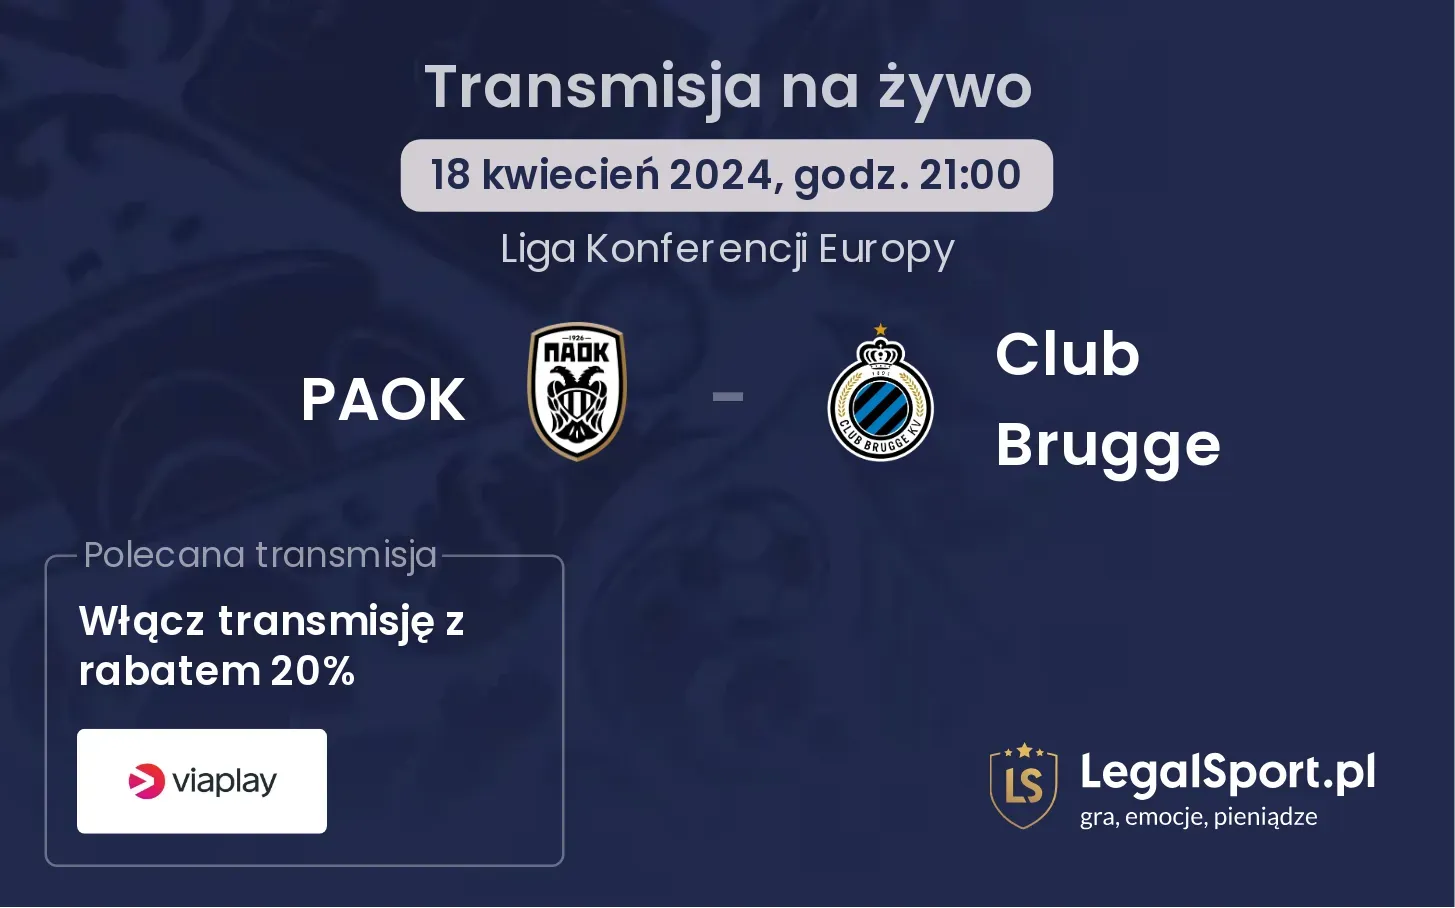 PAOK - Club Brugge transmisja na żywo